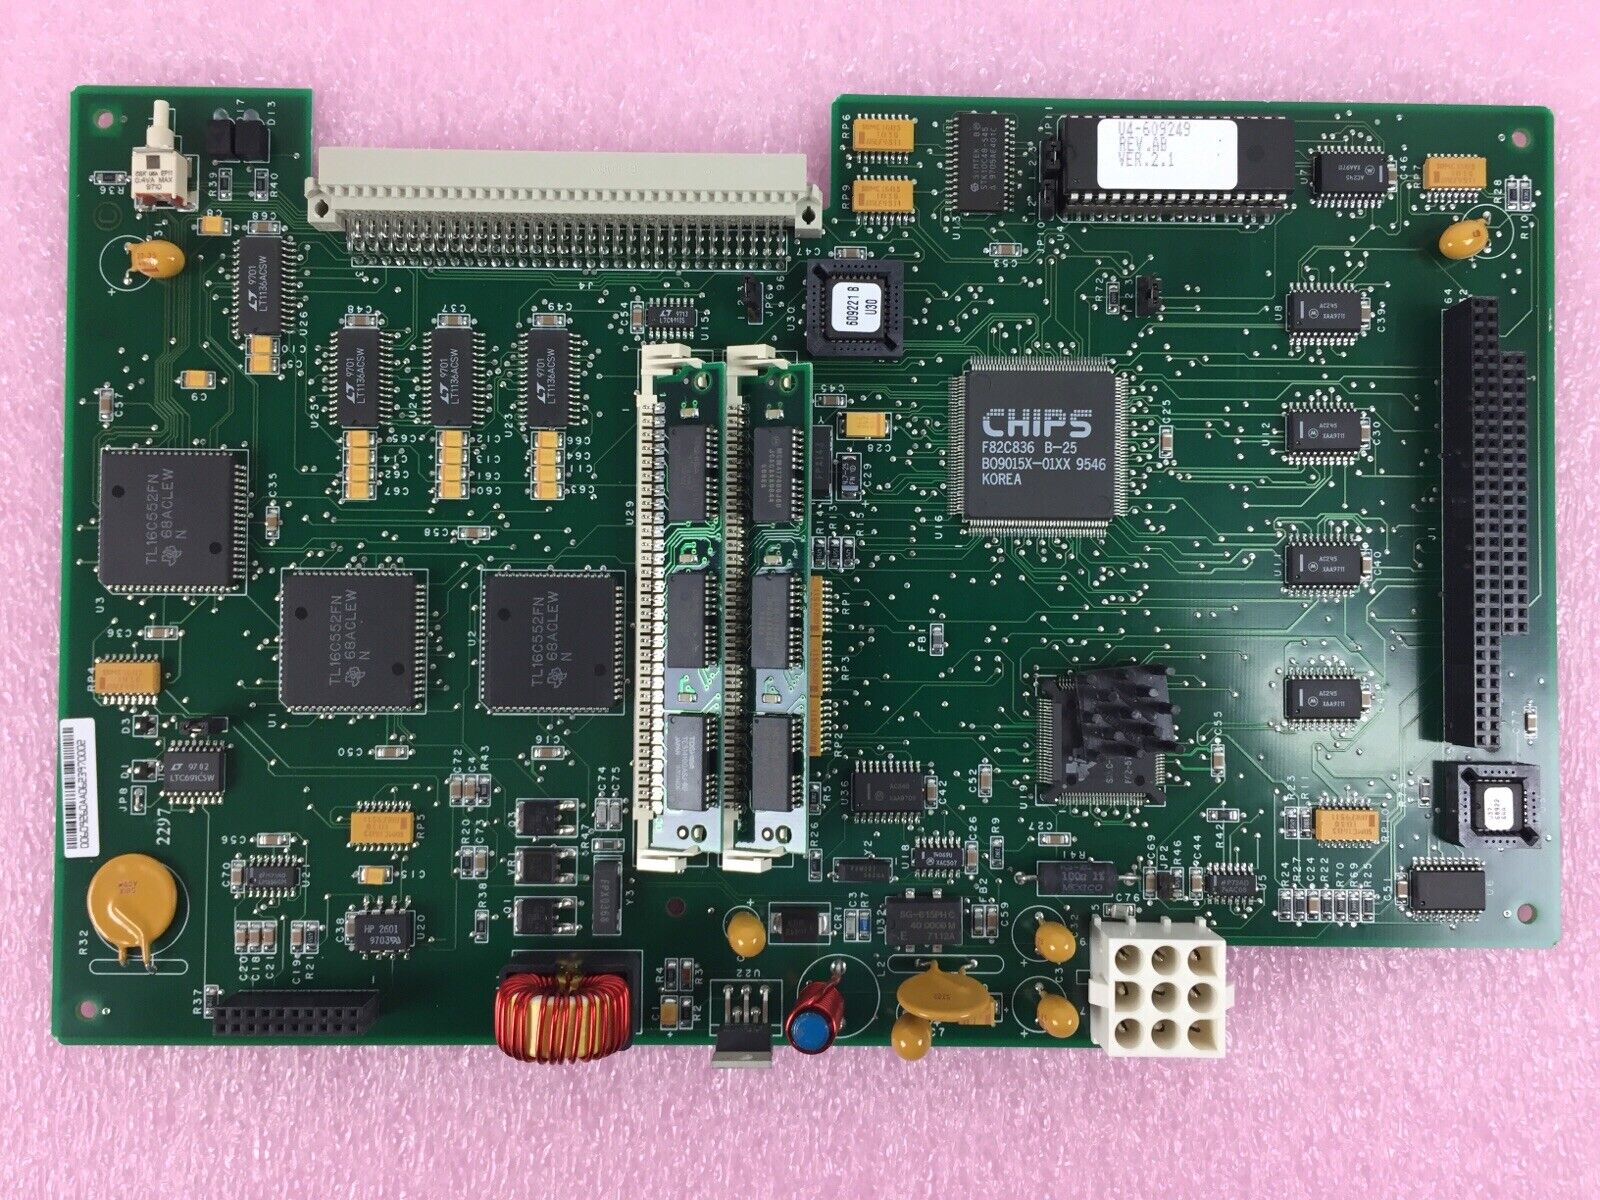 Circuit Board - Chips B0915X-01XX 9546 F82C836 - 609260 - REV AA - Untested